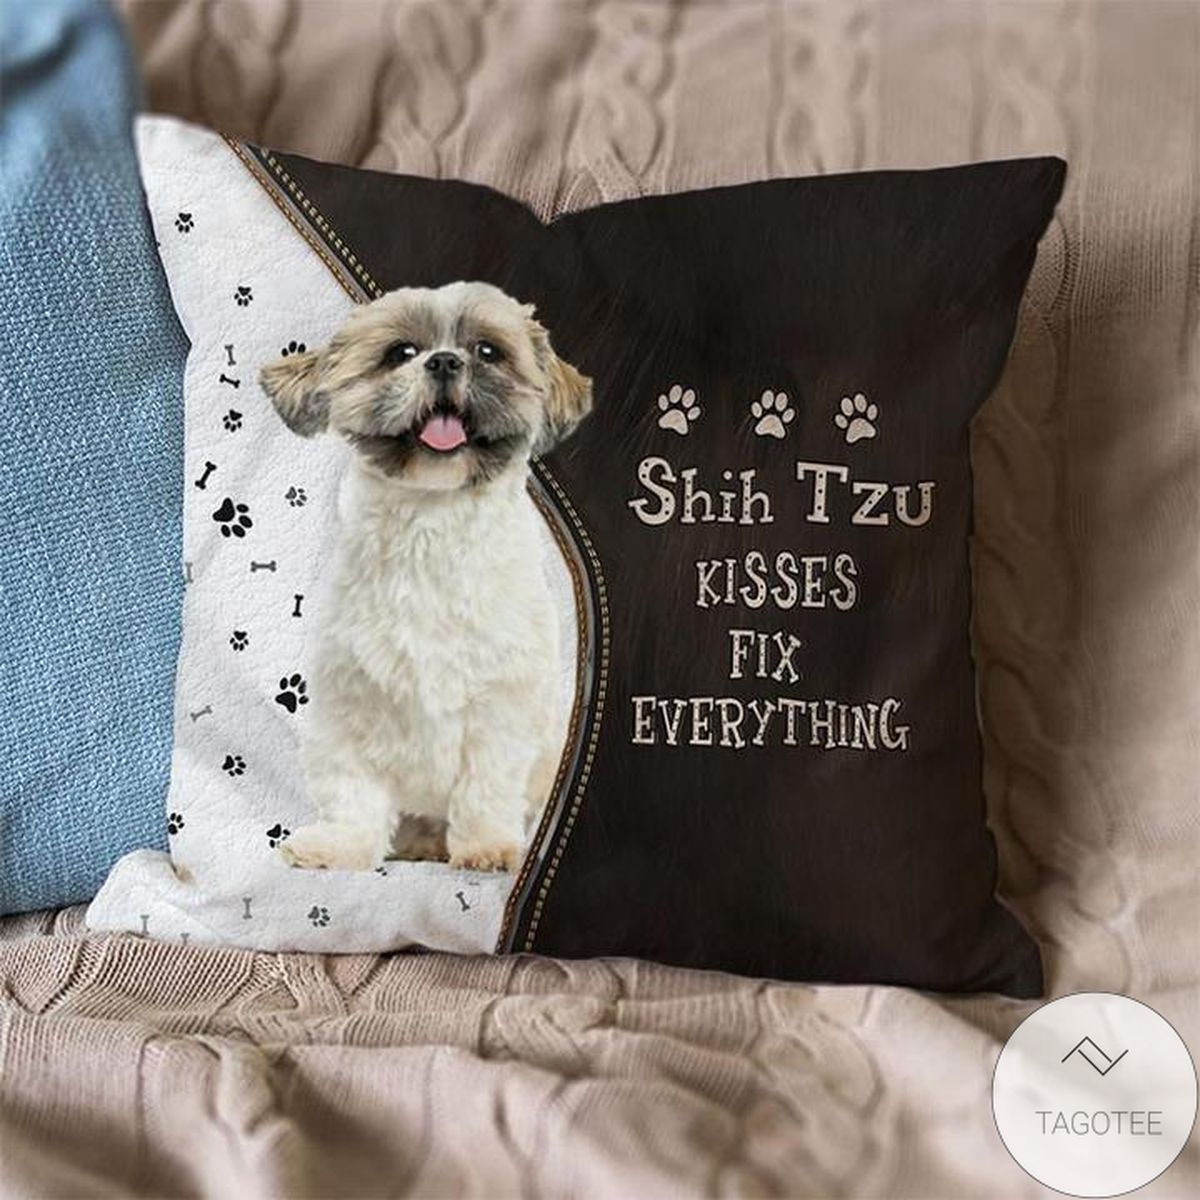 Shih Tzu Kisses Fix Everything Pillowcase